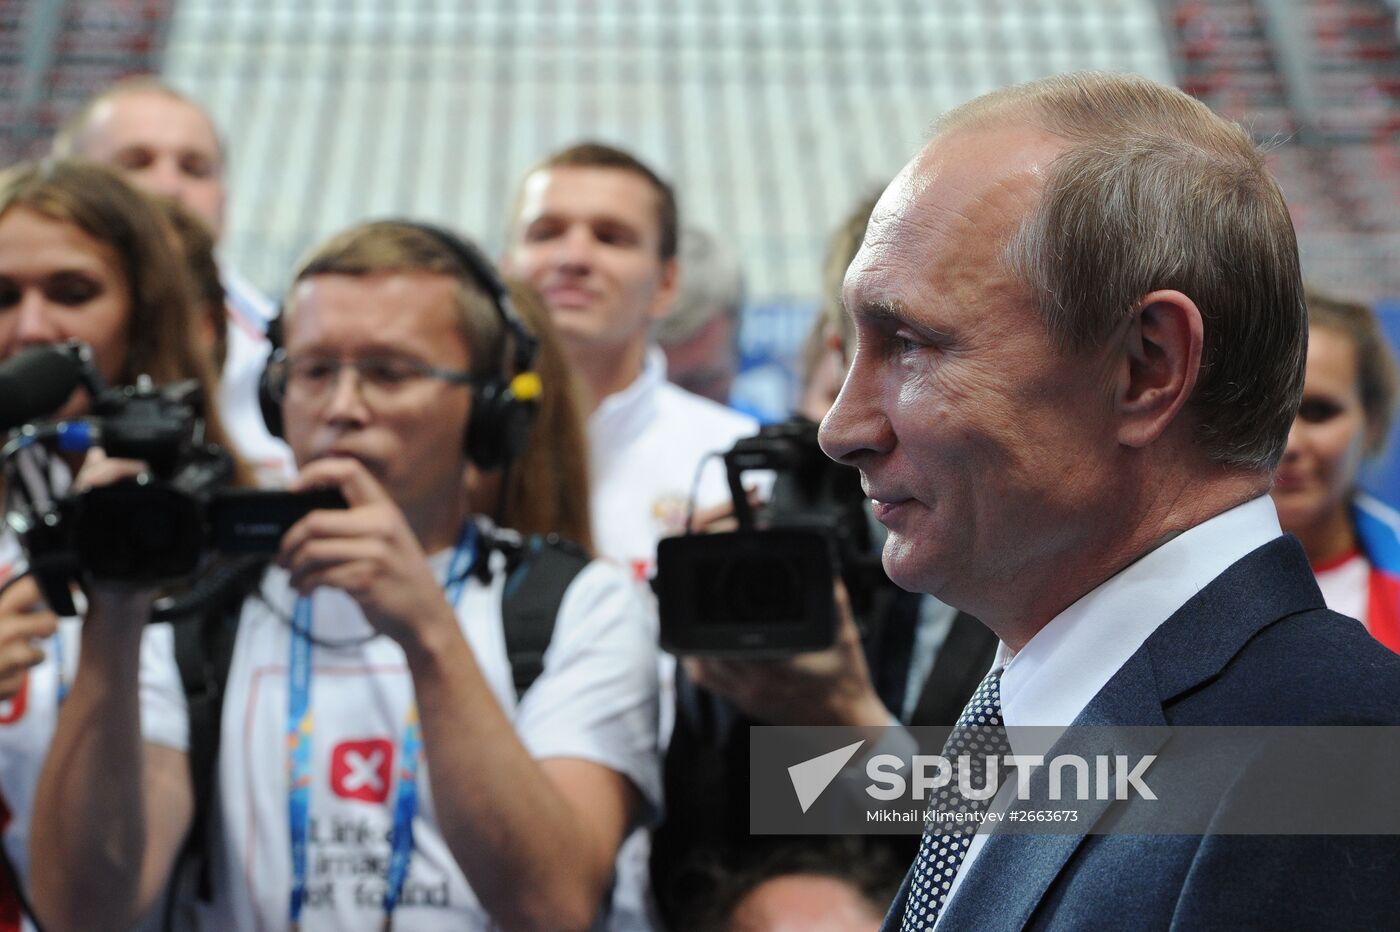 President Putin meets with national aquatic sports team